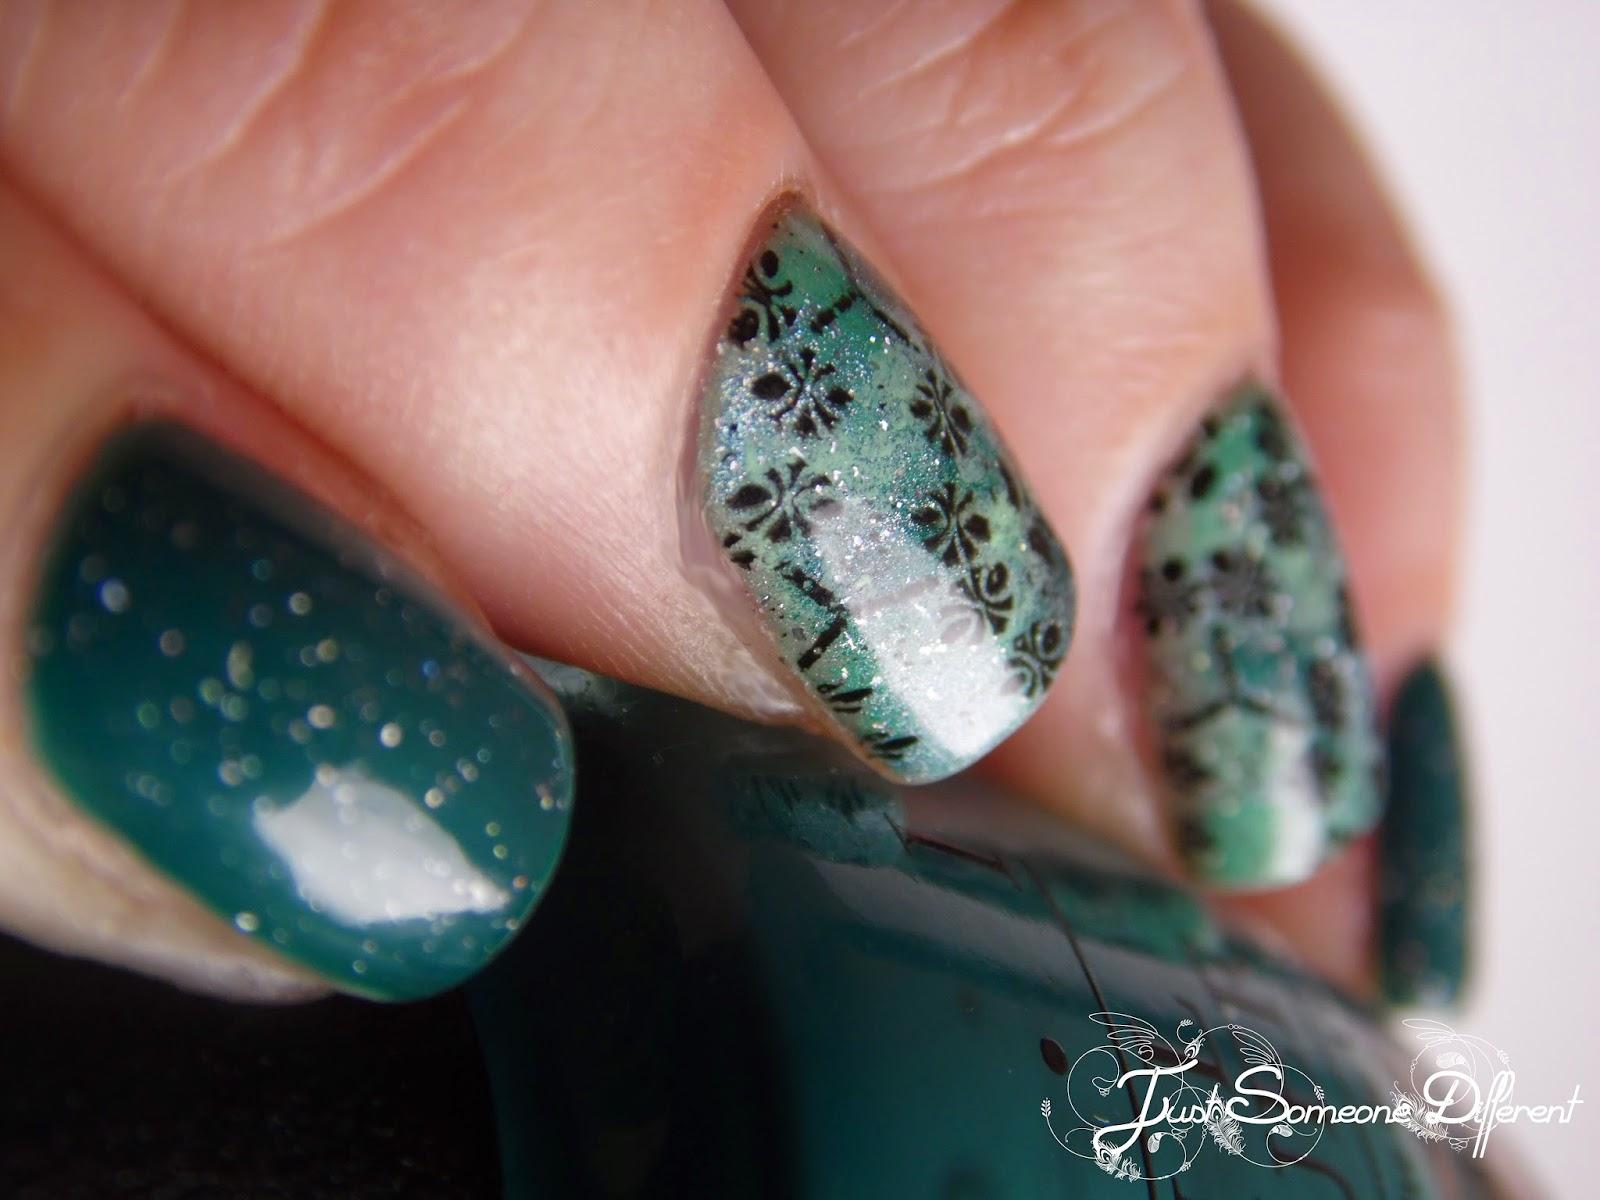 Winter Nails #3: Fairy snowflakes